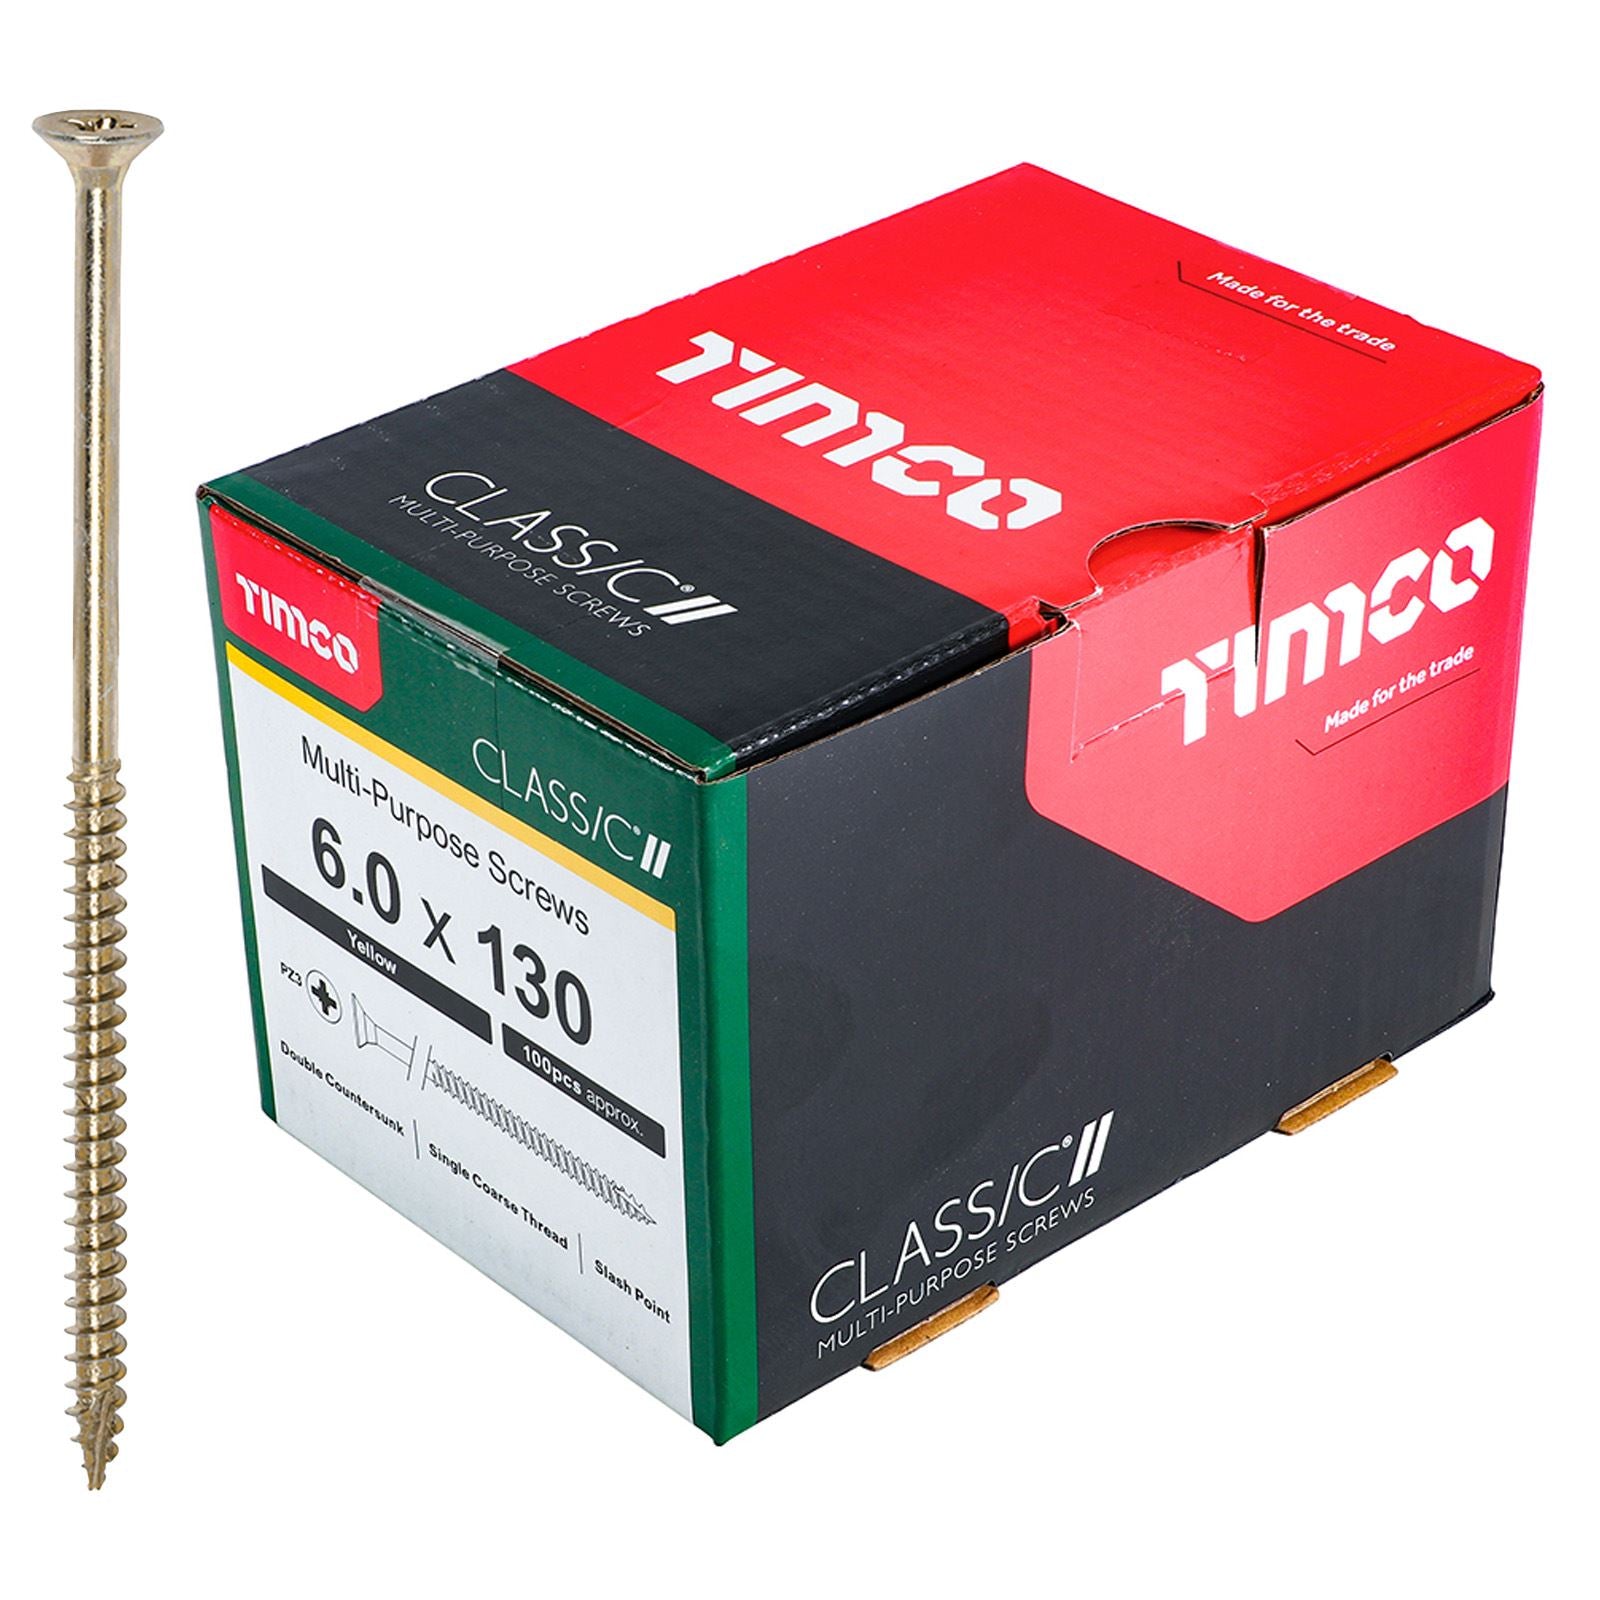 TIMCO Classic Multi Purpose Screws Pozi Head Double Countersunk Yellow Boxed - Choose Size